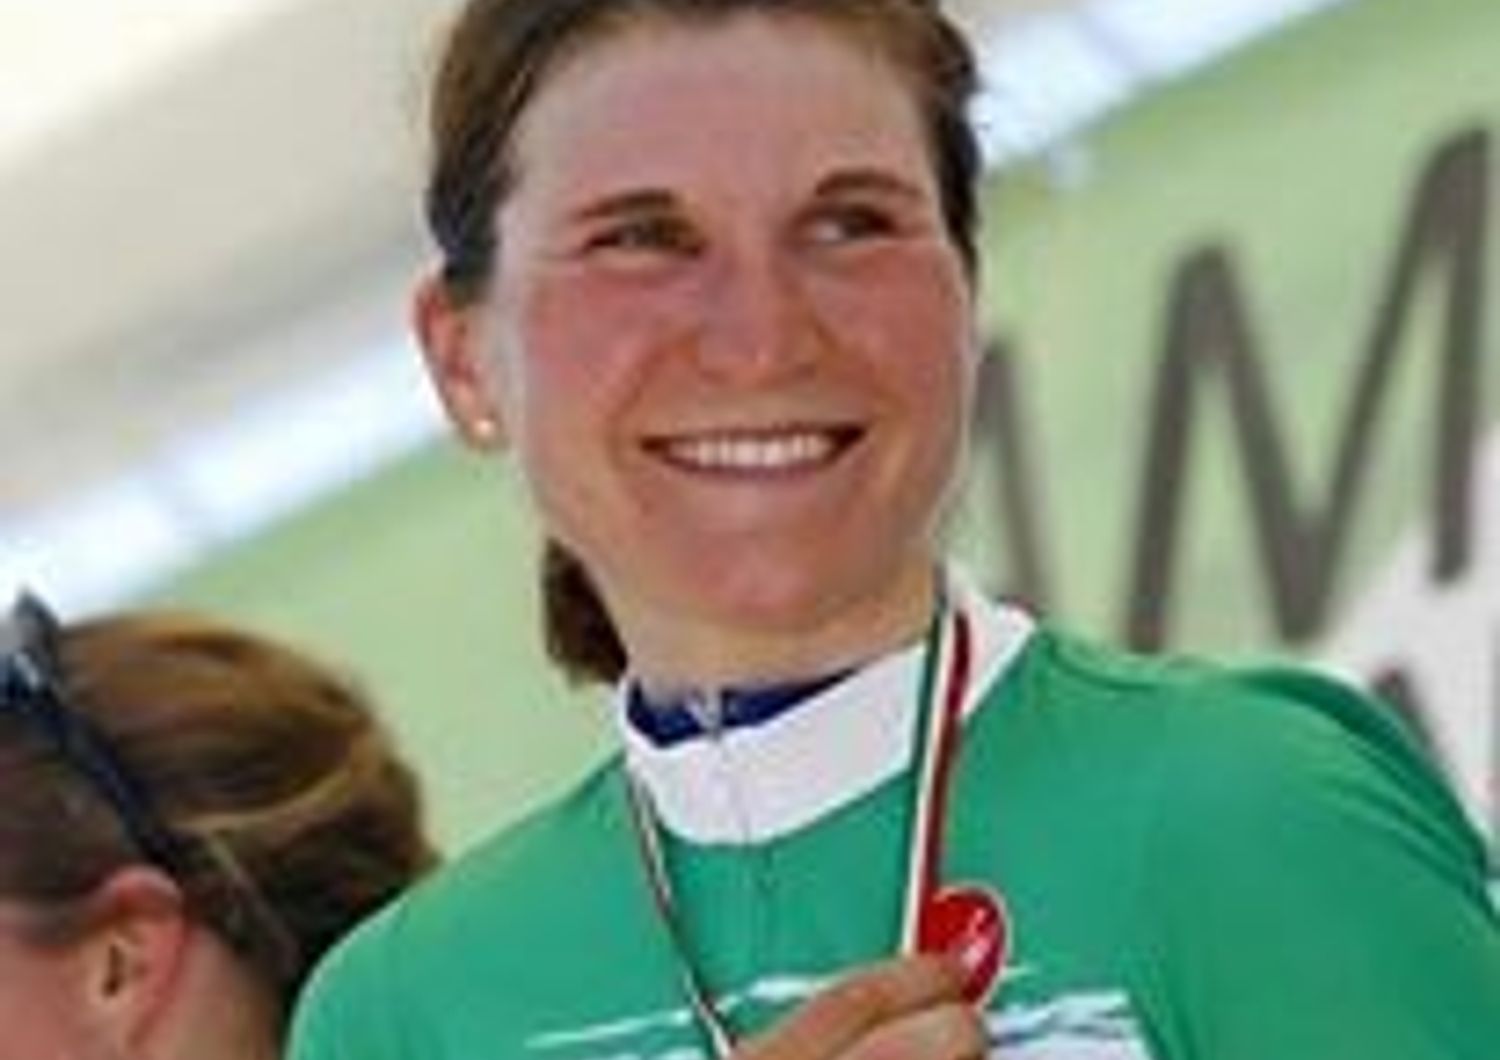 Ciclismo donne, bronzo a Longo Borghini&nbsp;oro a Van der Breggen